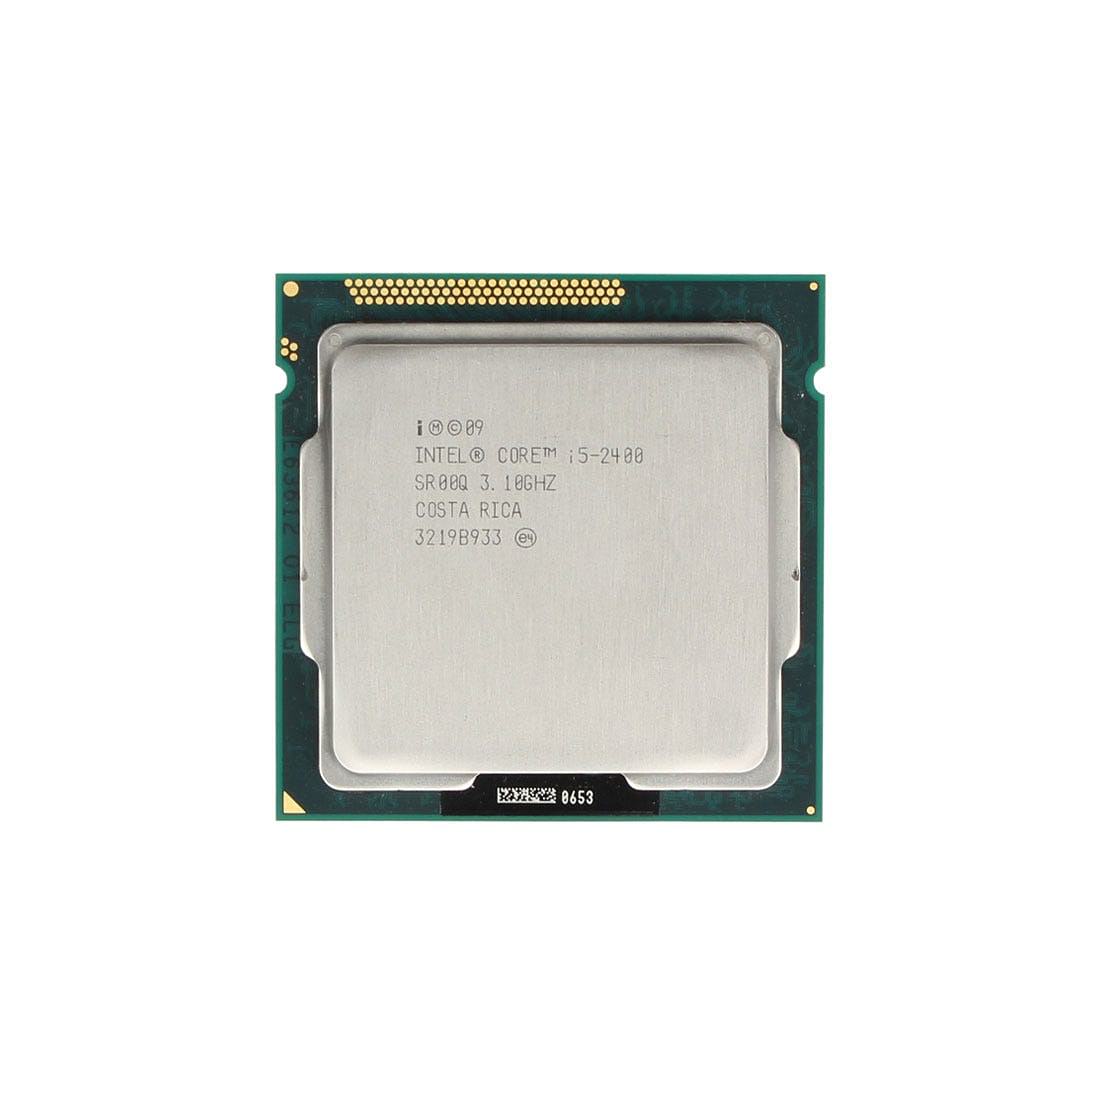 

Intel Core Processor i5-2400